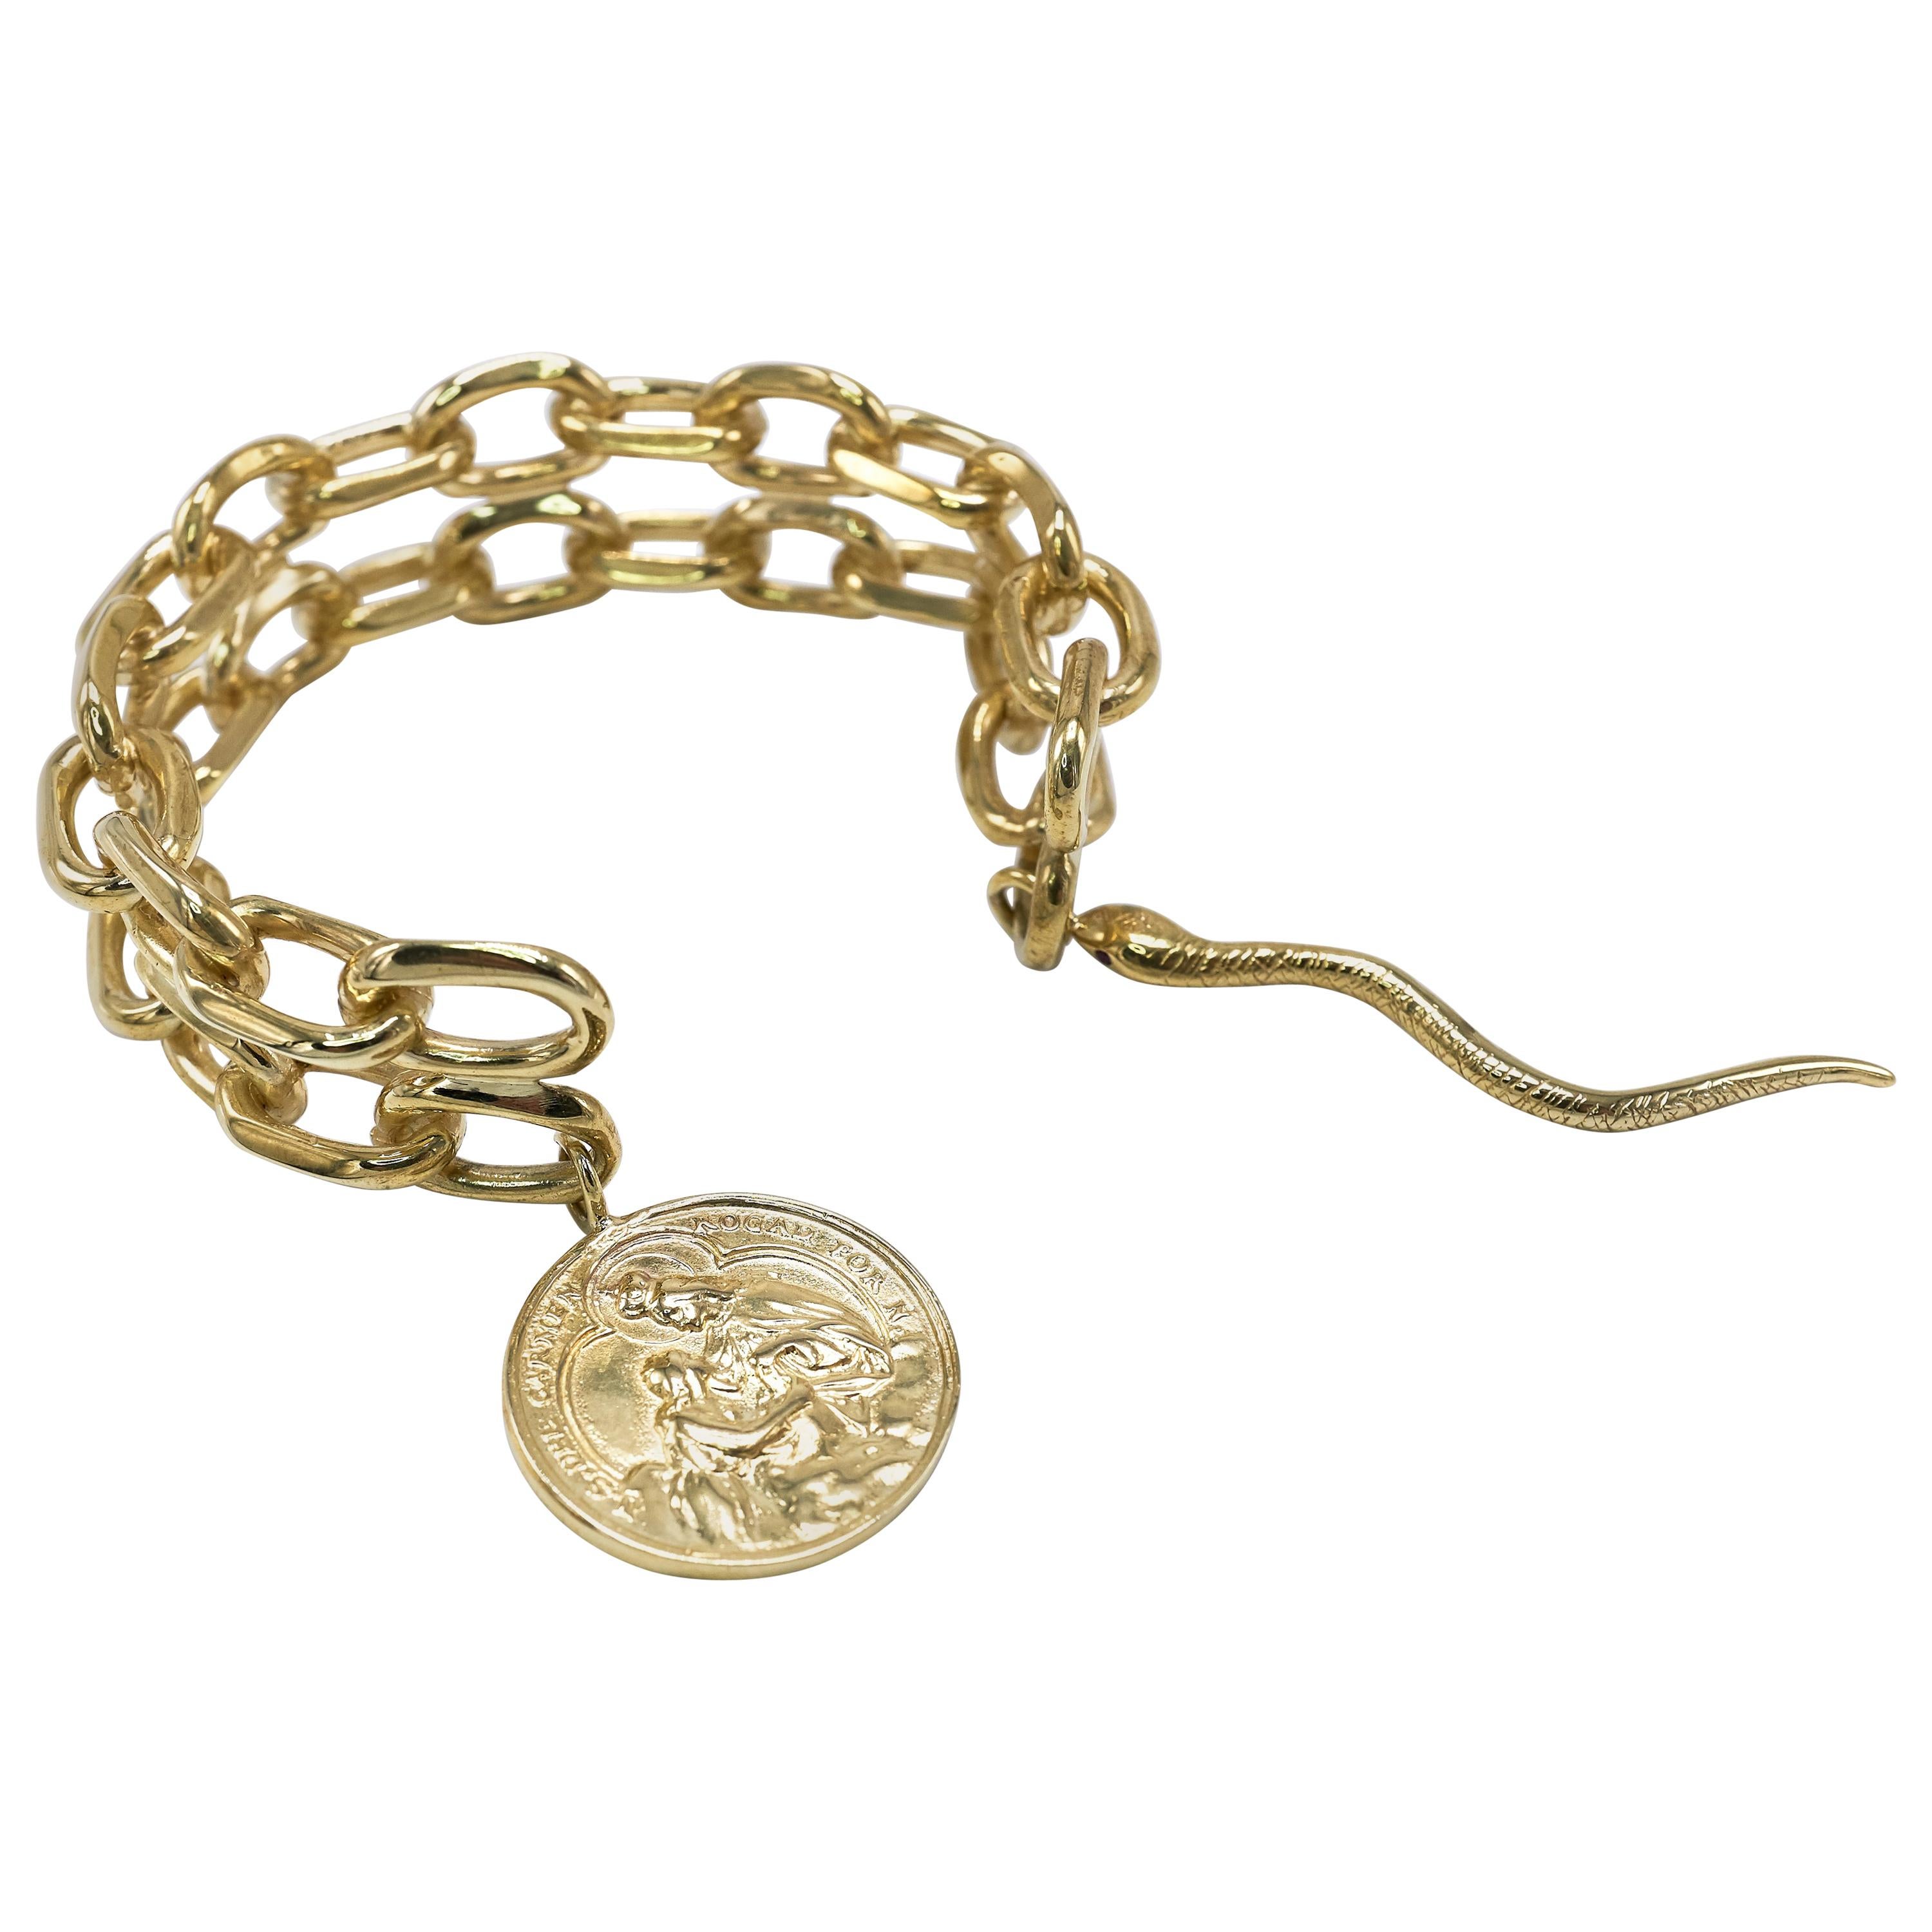 Bracelet bracelet Vierge Marie Médaille serpent yeux rubis  J Dauphin

J DAUPHIN Manchette 